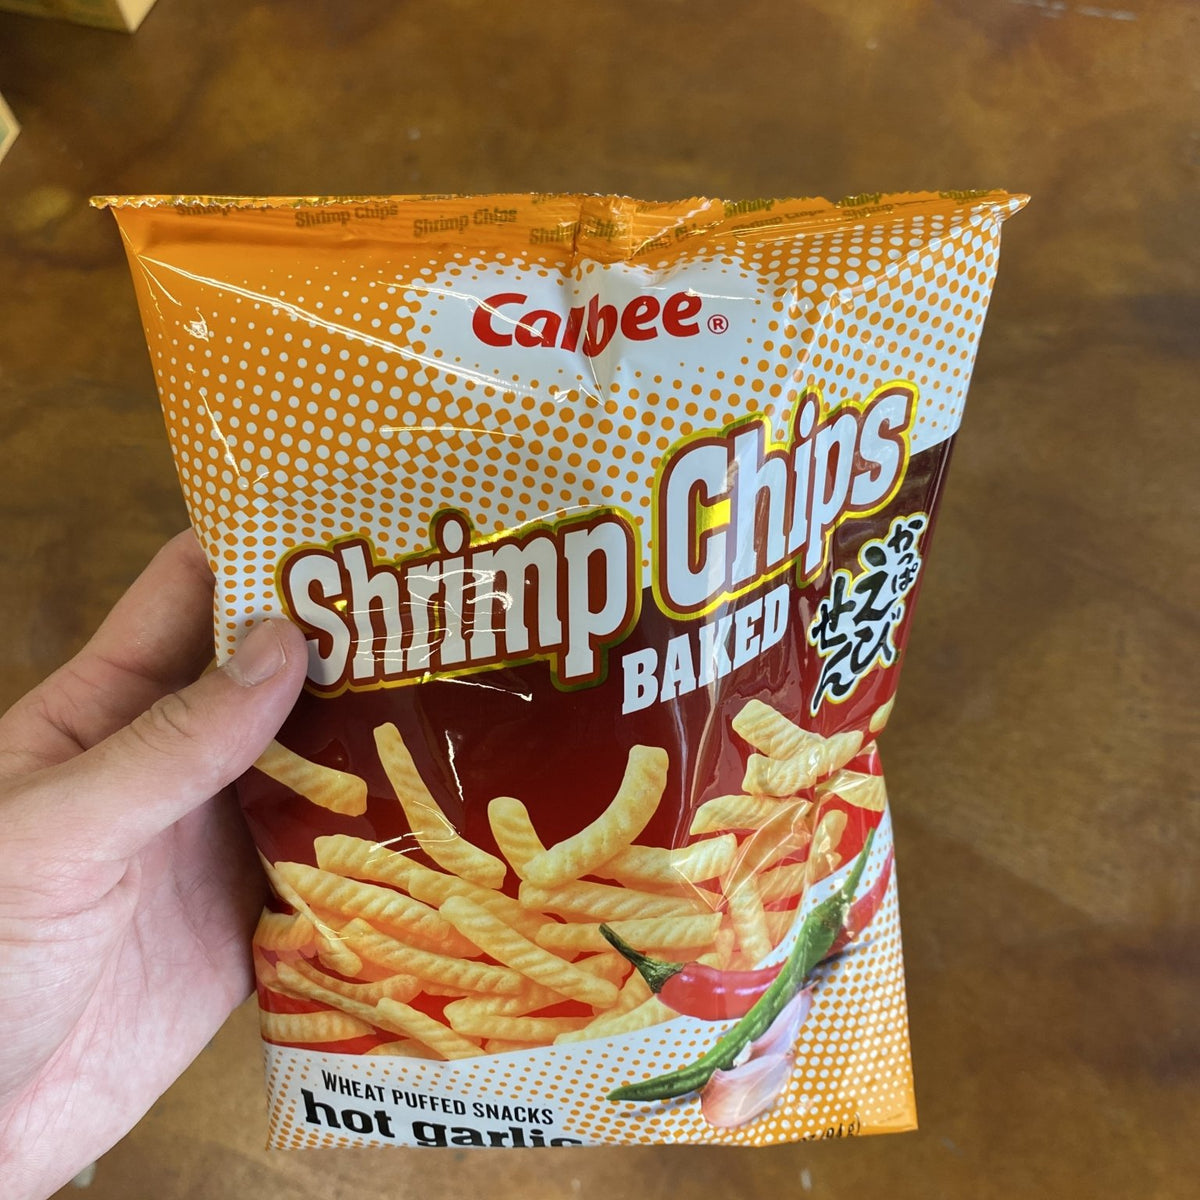 Calbee Shrimp Chips, Baked, Original, Value Pack - 8 oz